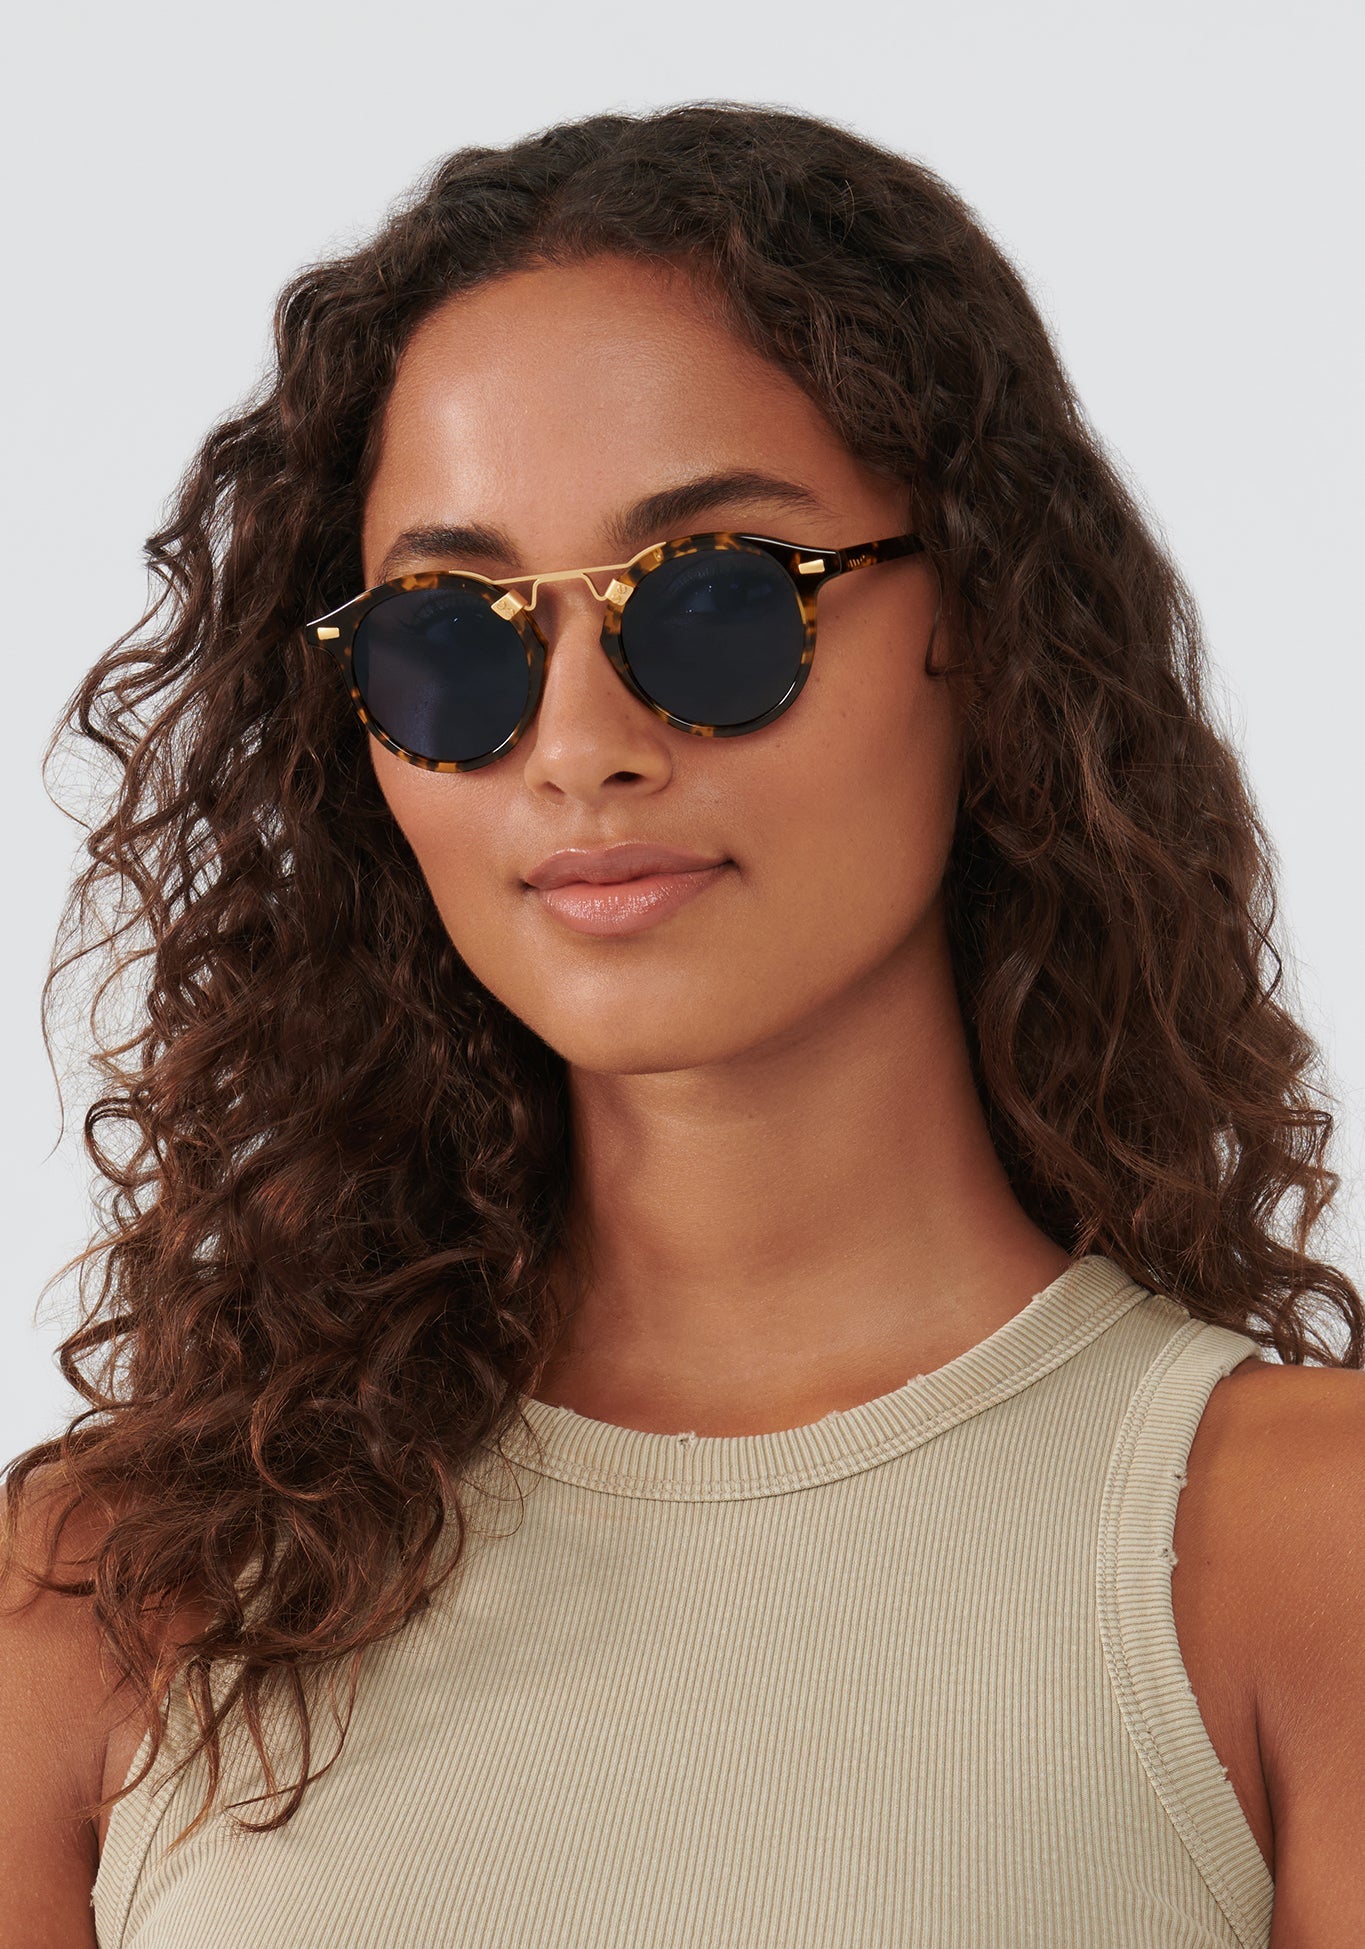 ST. LOUIS CLASSICS | Bengal Polarized 24K Handcrafted, luxury blue tortoise acetate KREWE Sunglasses womens model | Model: Meli